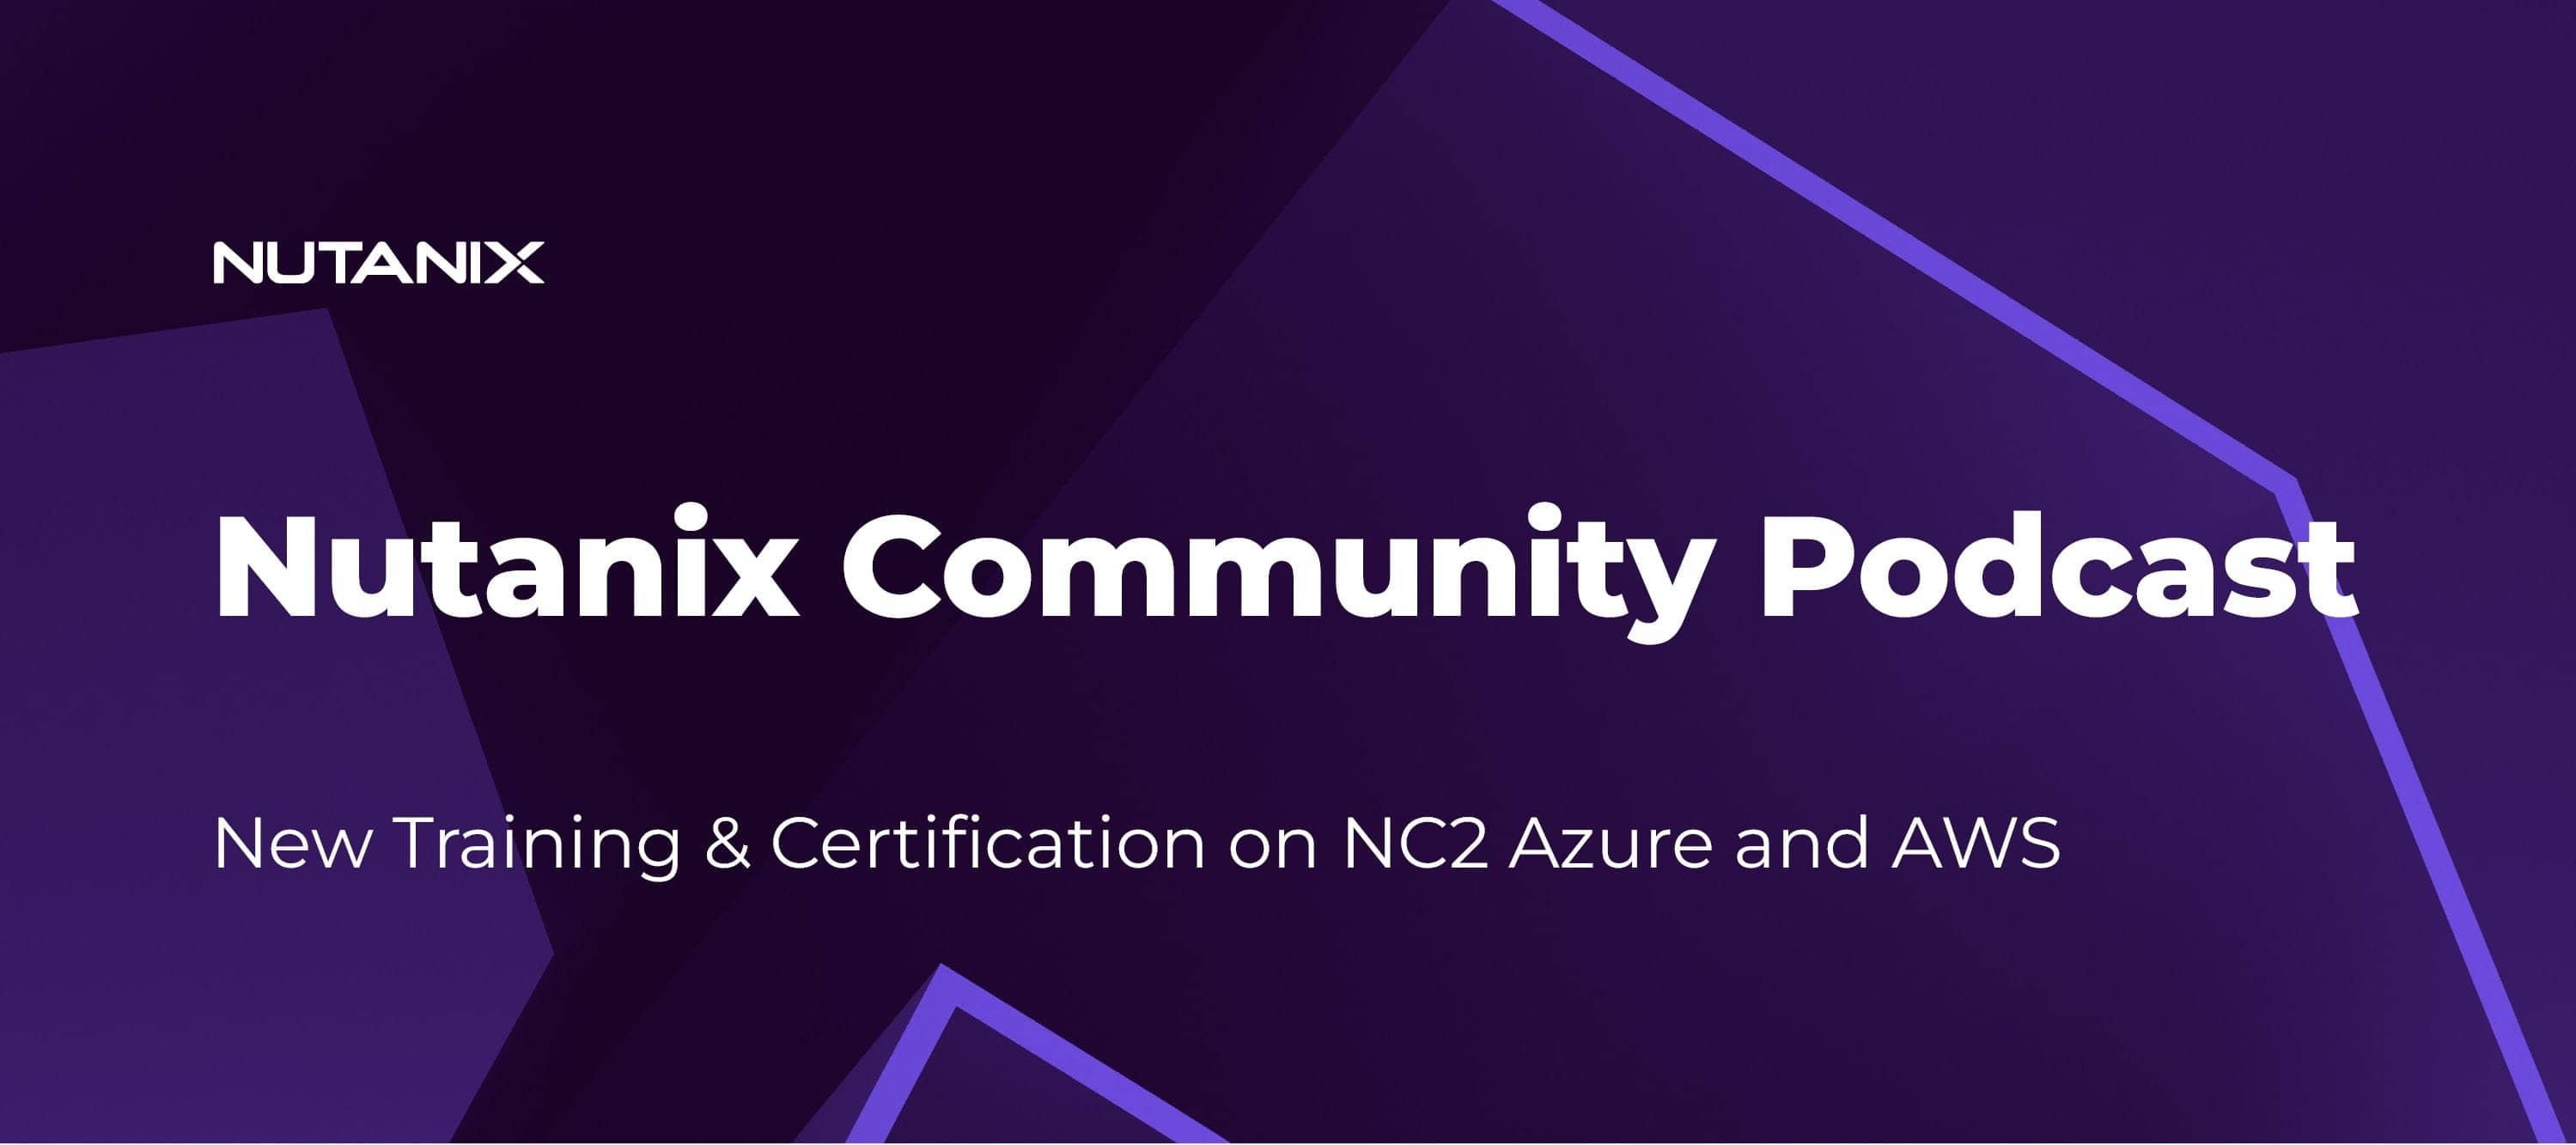 Nutanix Community Podcast: New Training & Certification on NC2 Azure and AWS